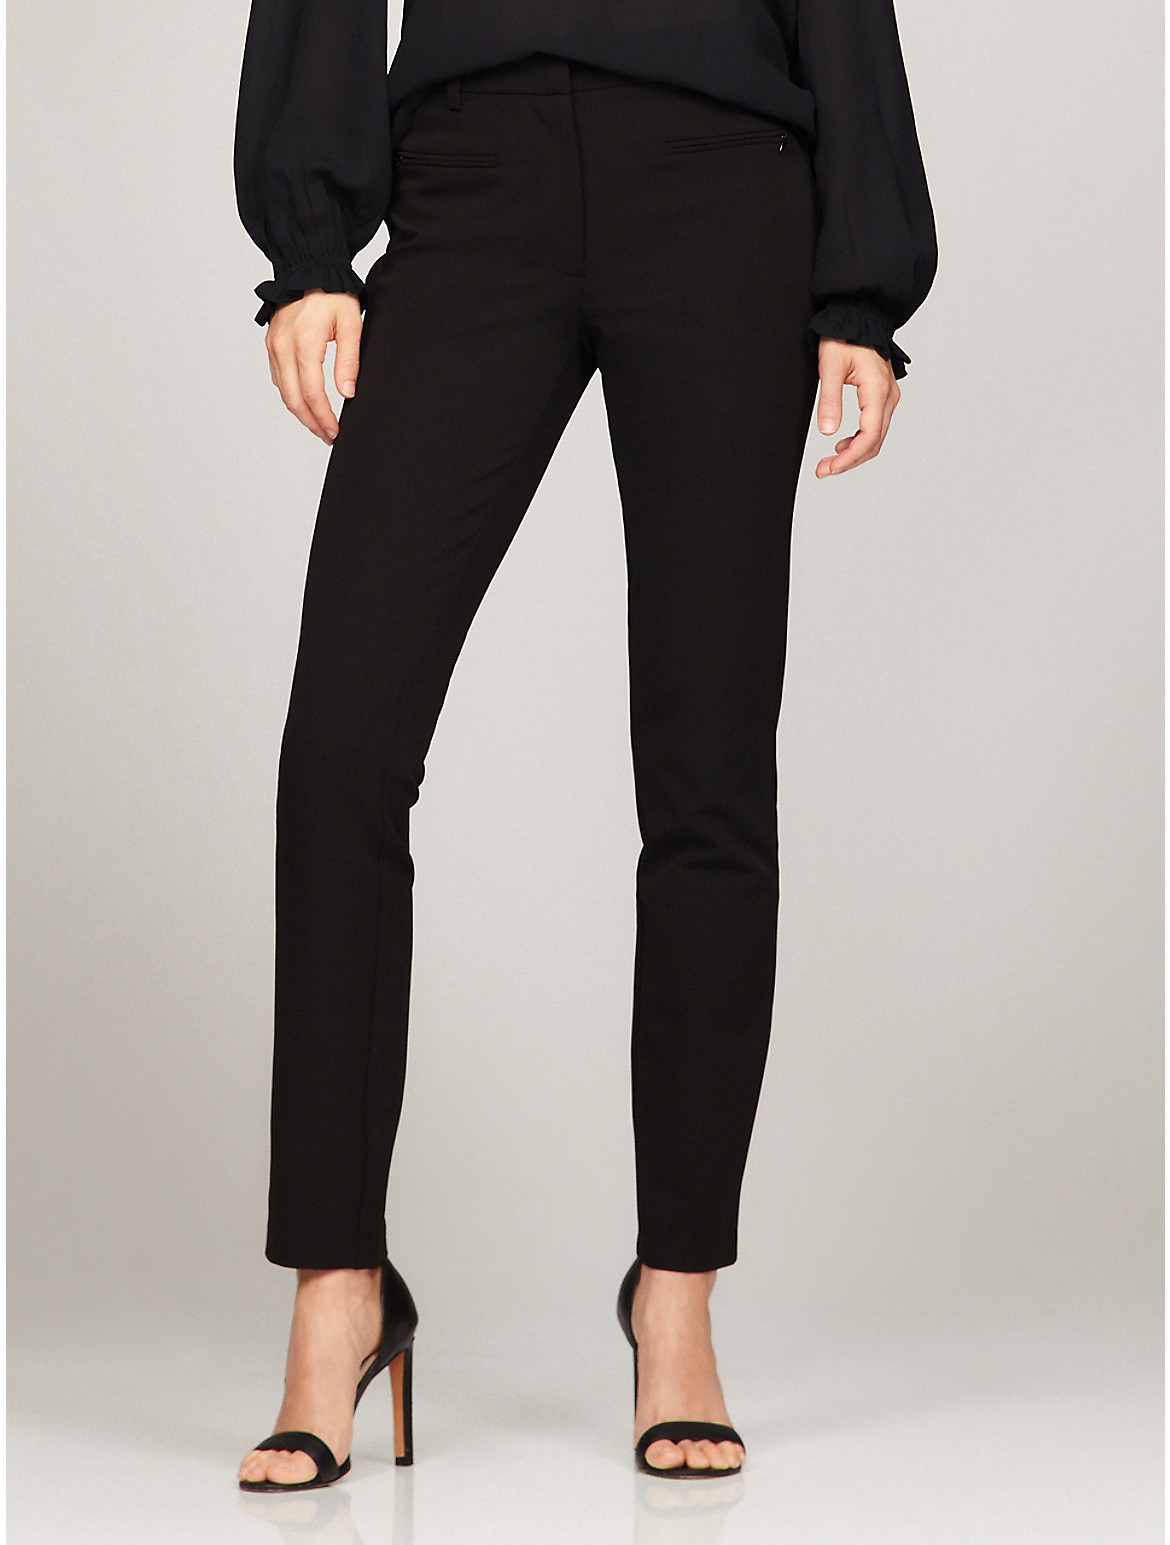 Tommy Hilfiger Women's Slim Fit Solid Pant